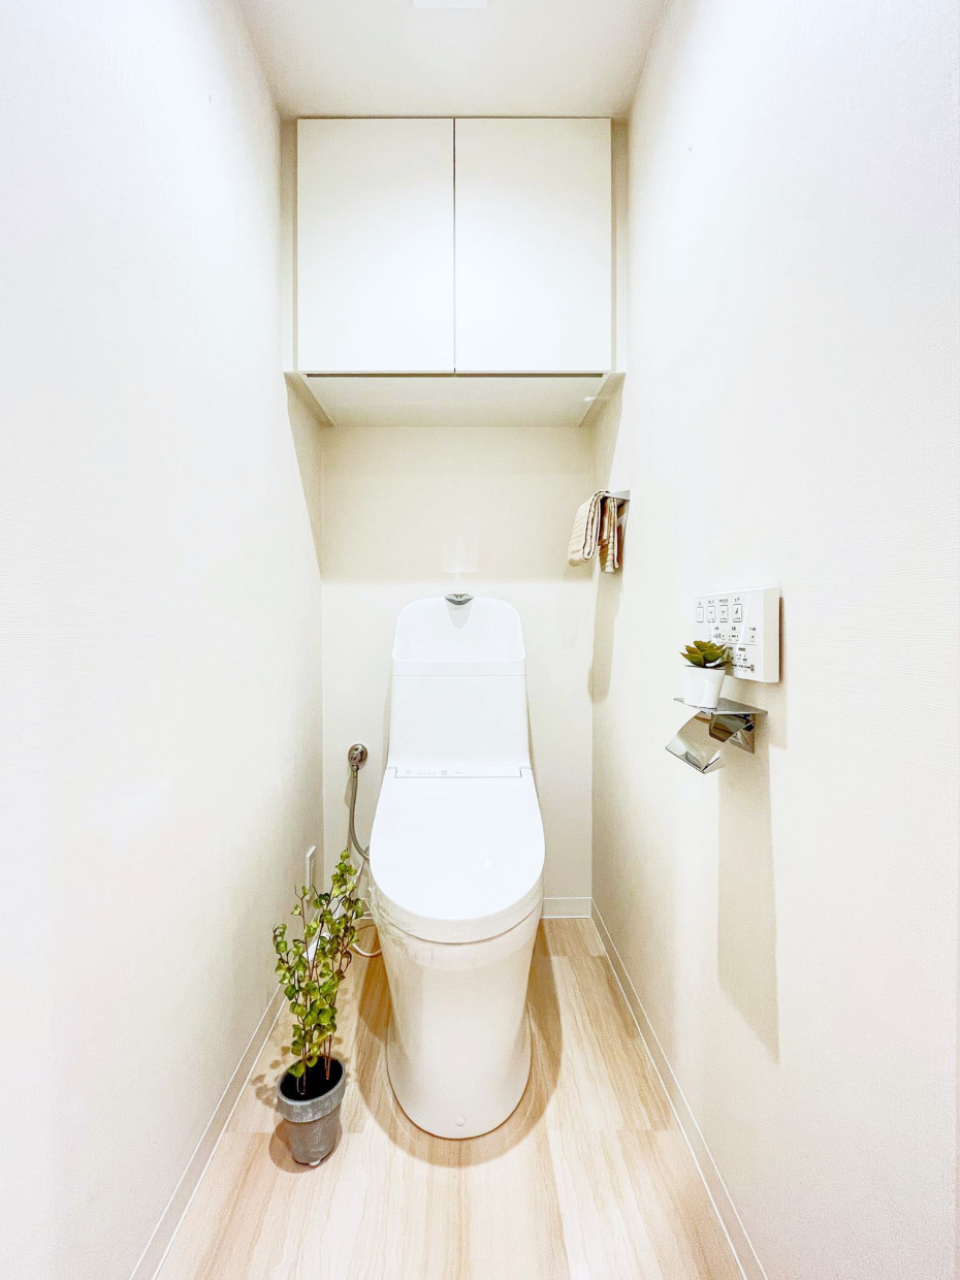 TOTO製”セフィオンテクト”技術が採用されたトイレです